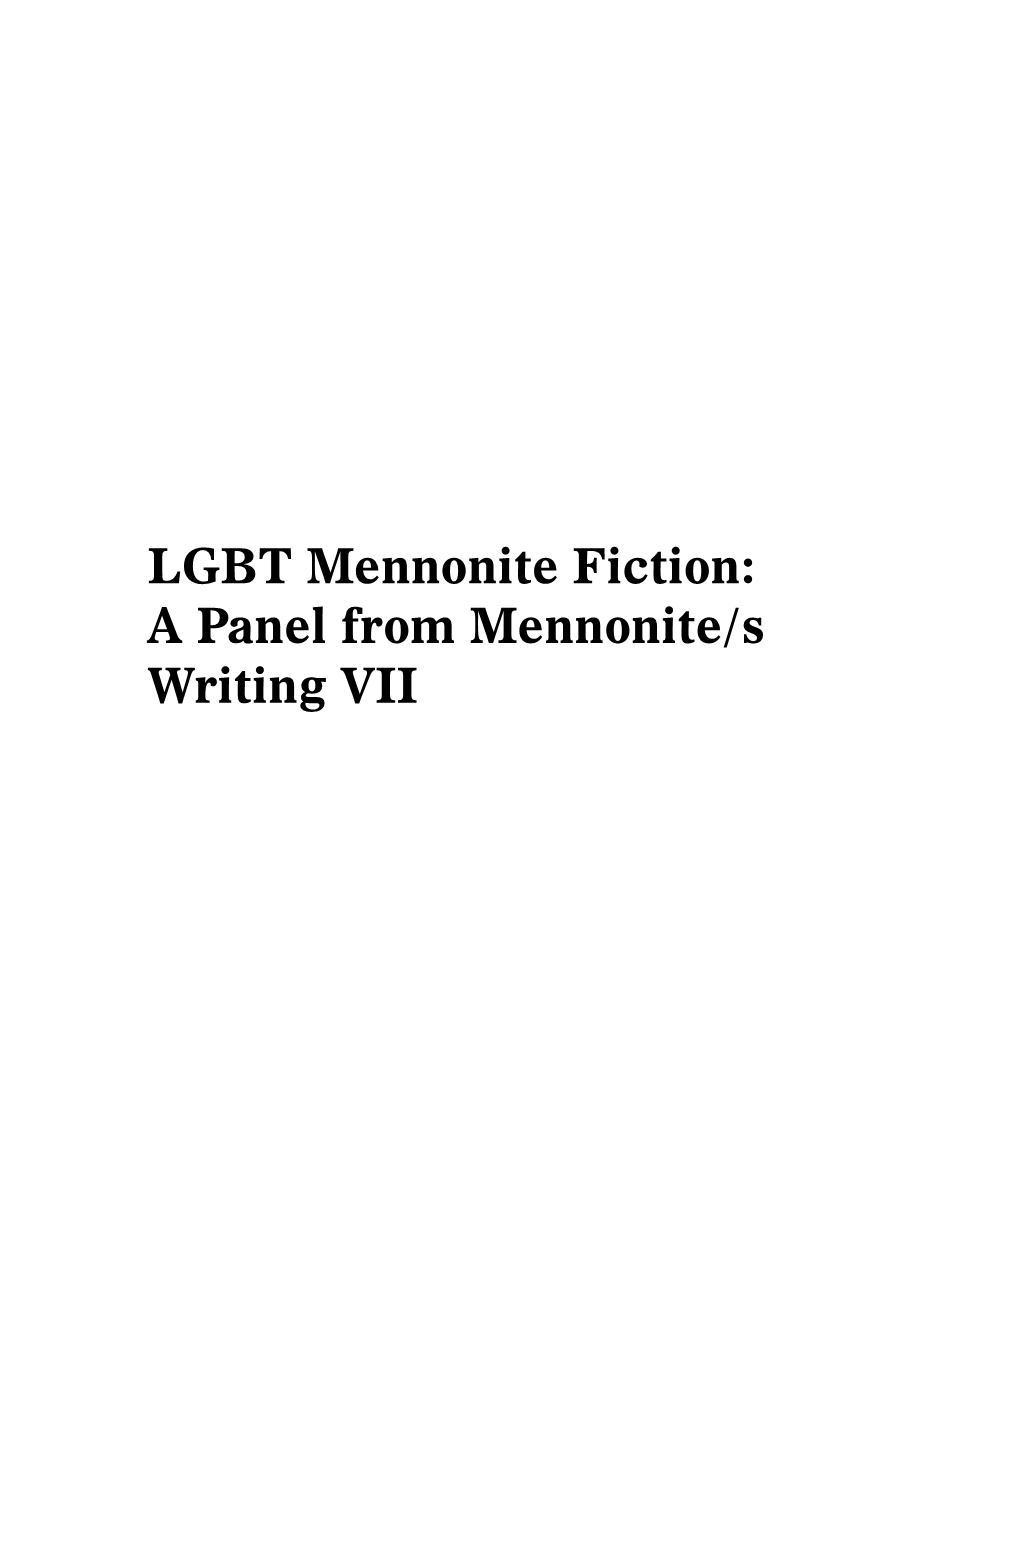 Journal of Mennonite Studies 34 (2016)